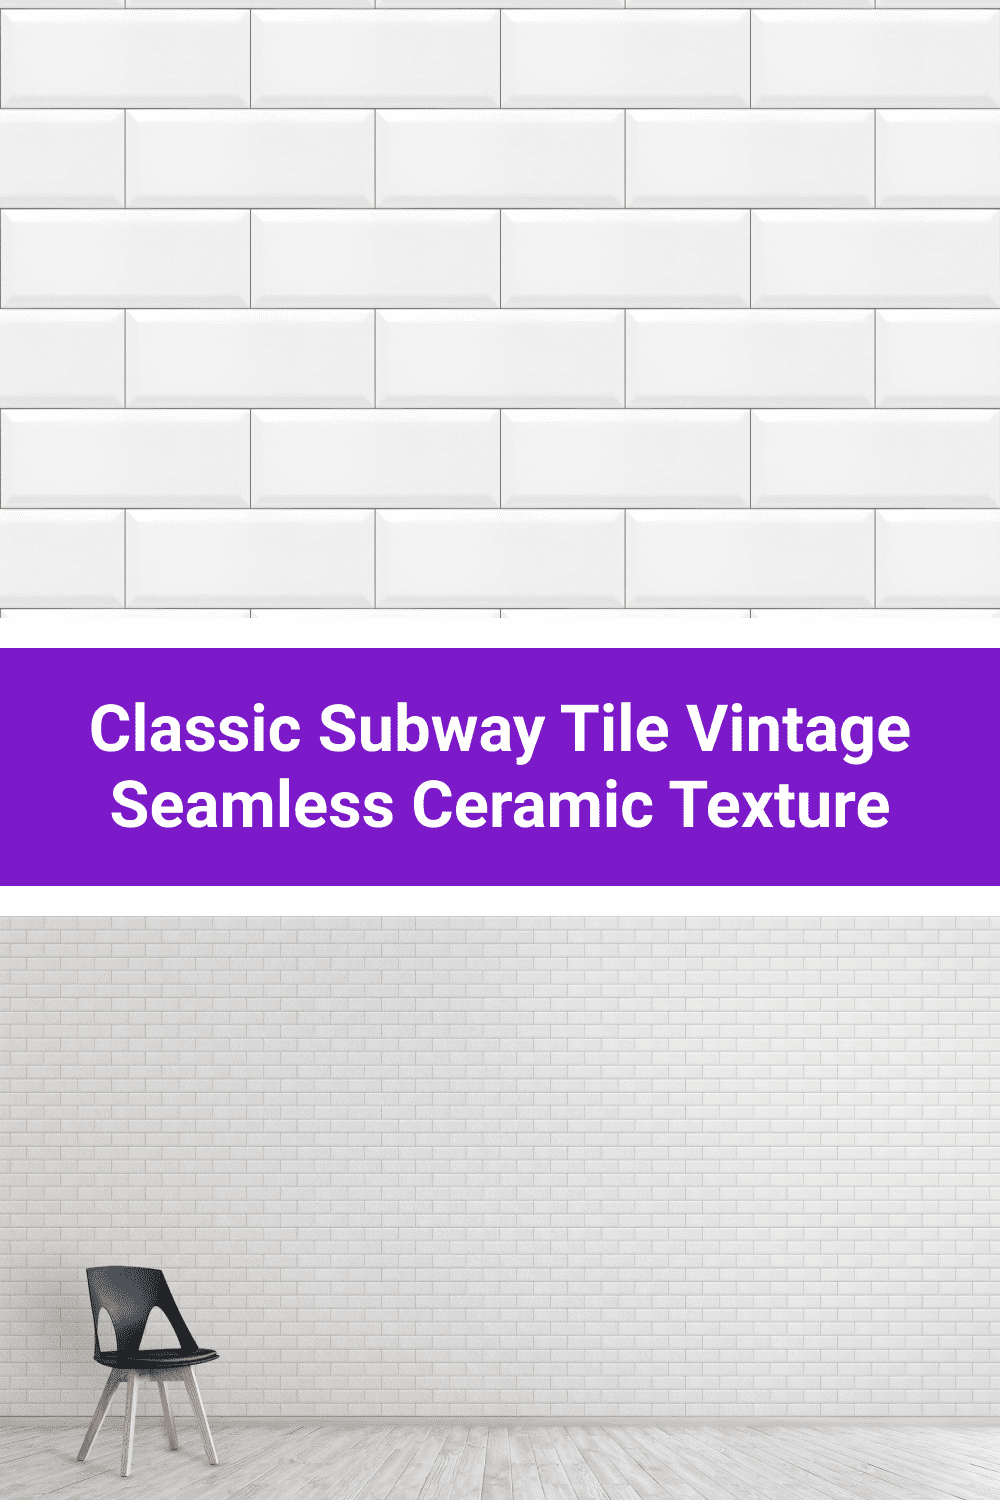 Classic subway tile vintage seamless ceramic texture.